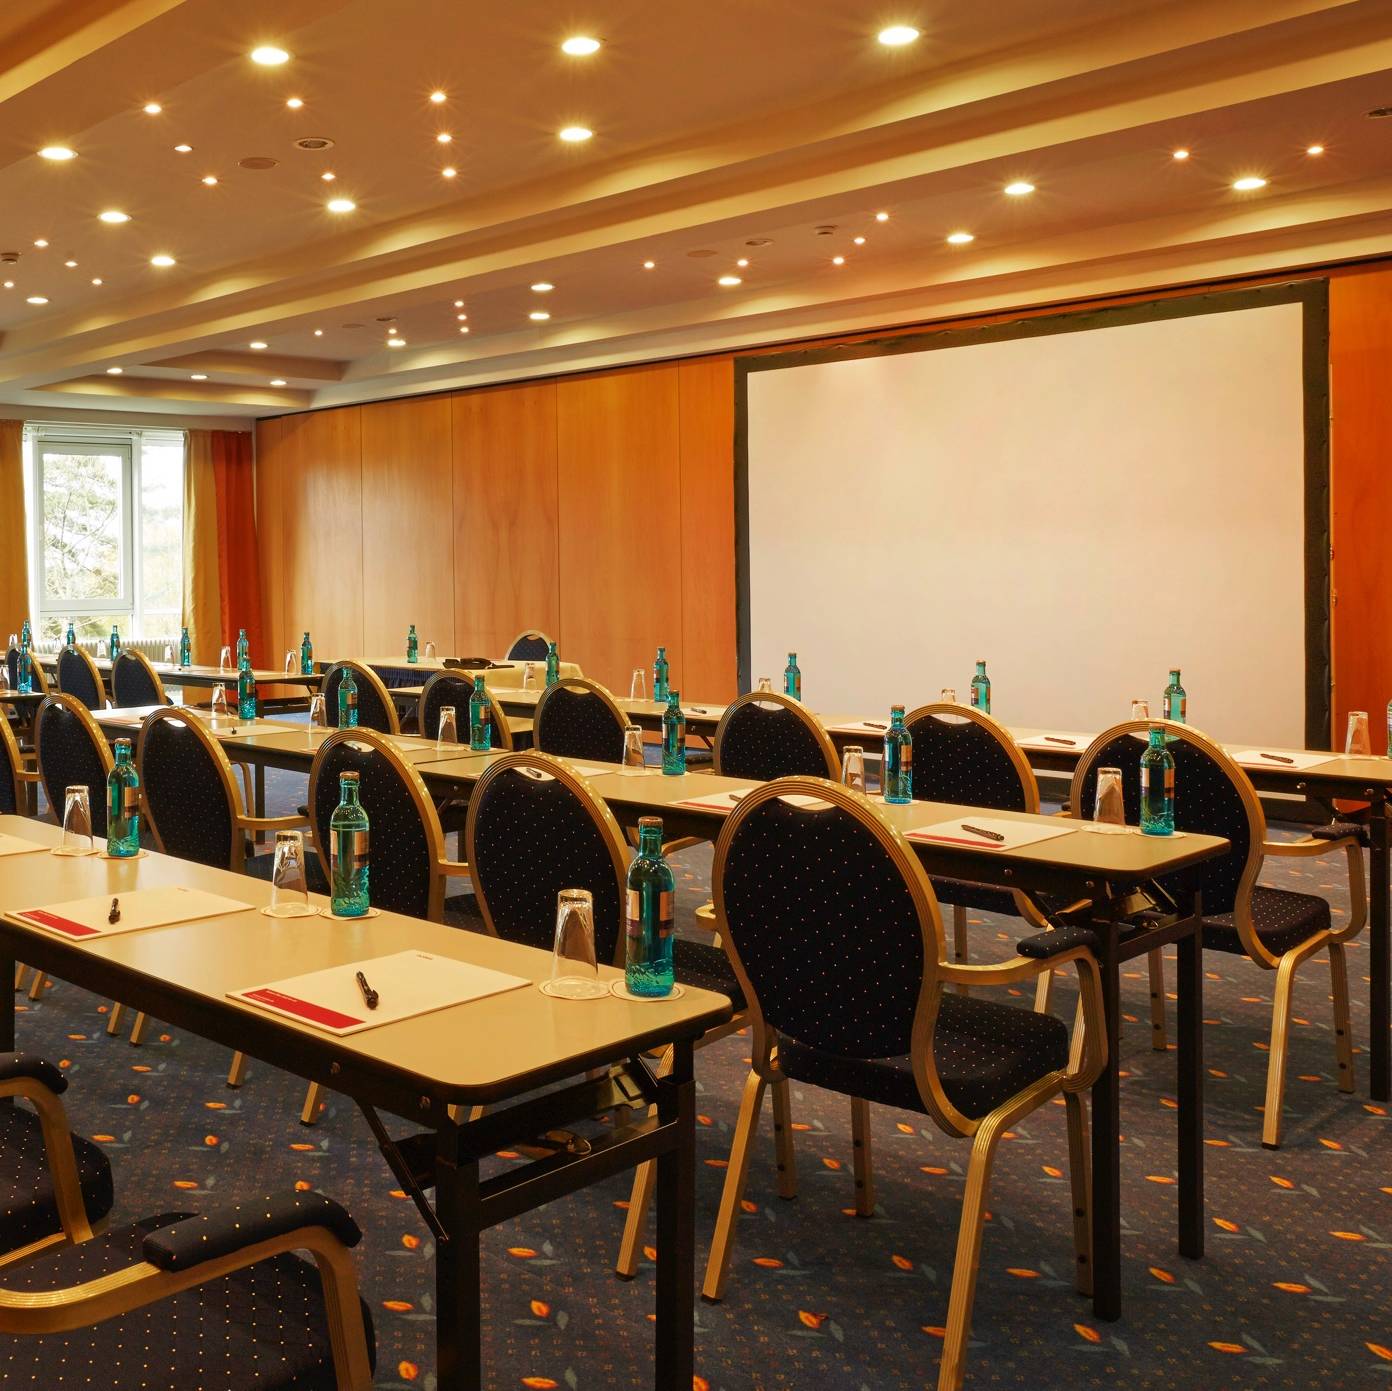 Conference area - H+ Hotel & Spa Friedrichroda